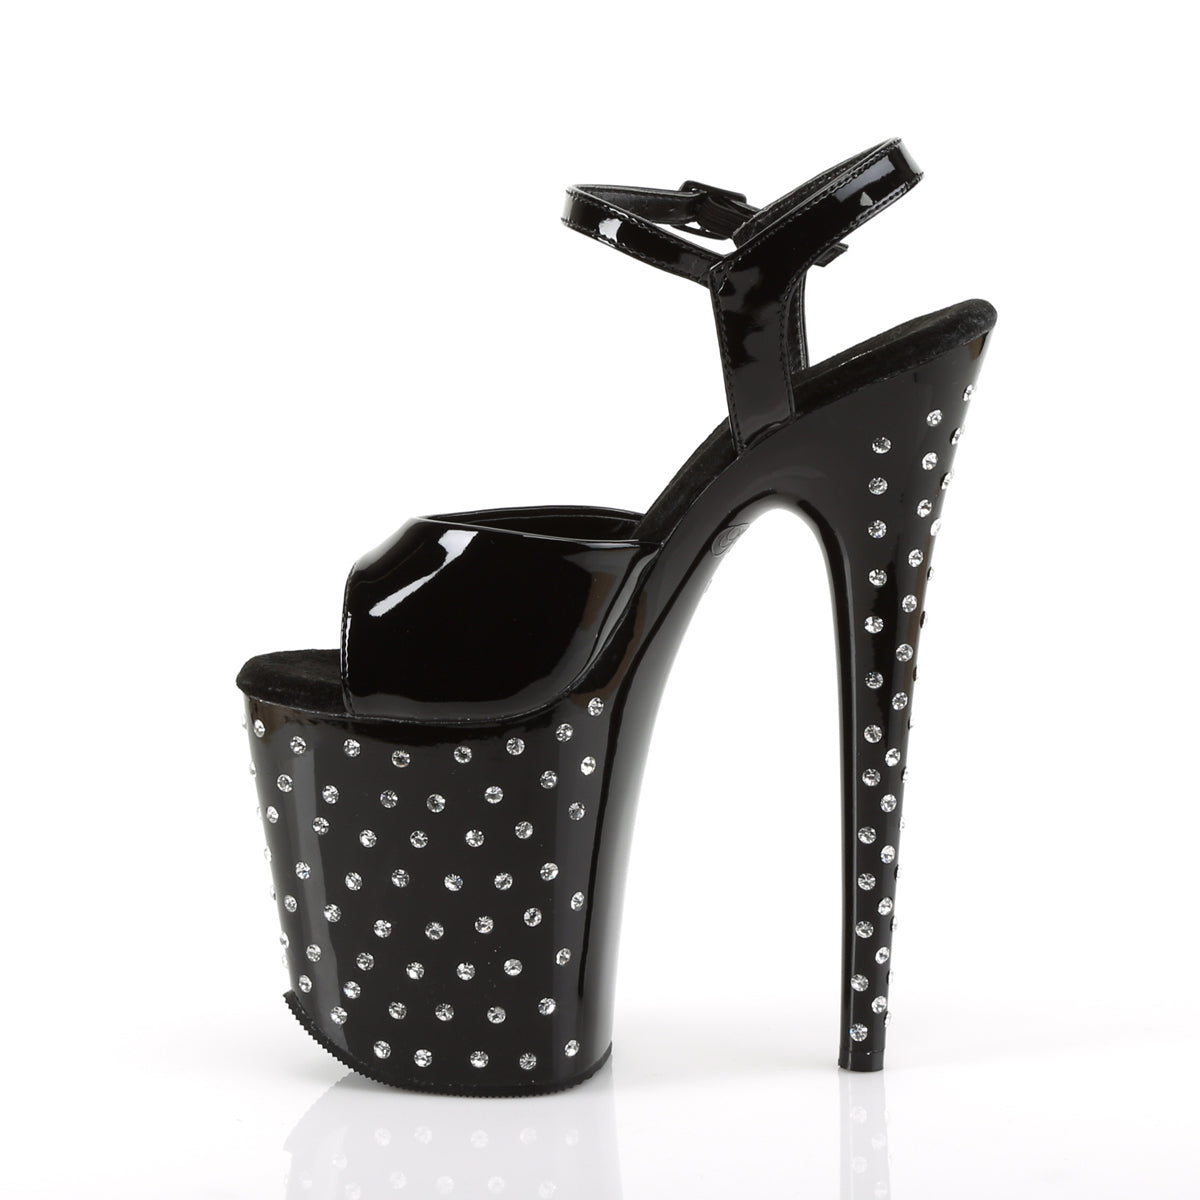 STARDUST-809 8 Inch Heel Black Patent Pole Dancing Platforms-Pleaser- Sexy Shoes Pole Dance Heels